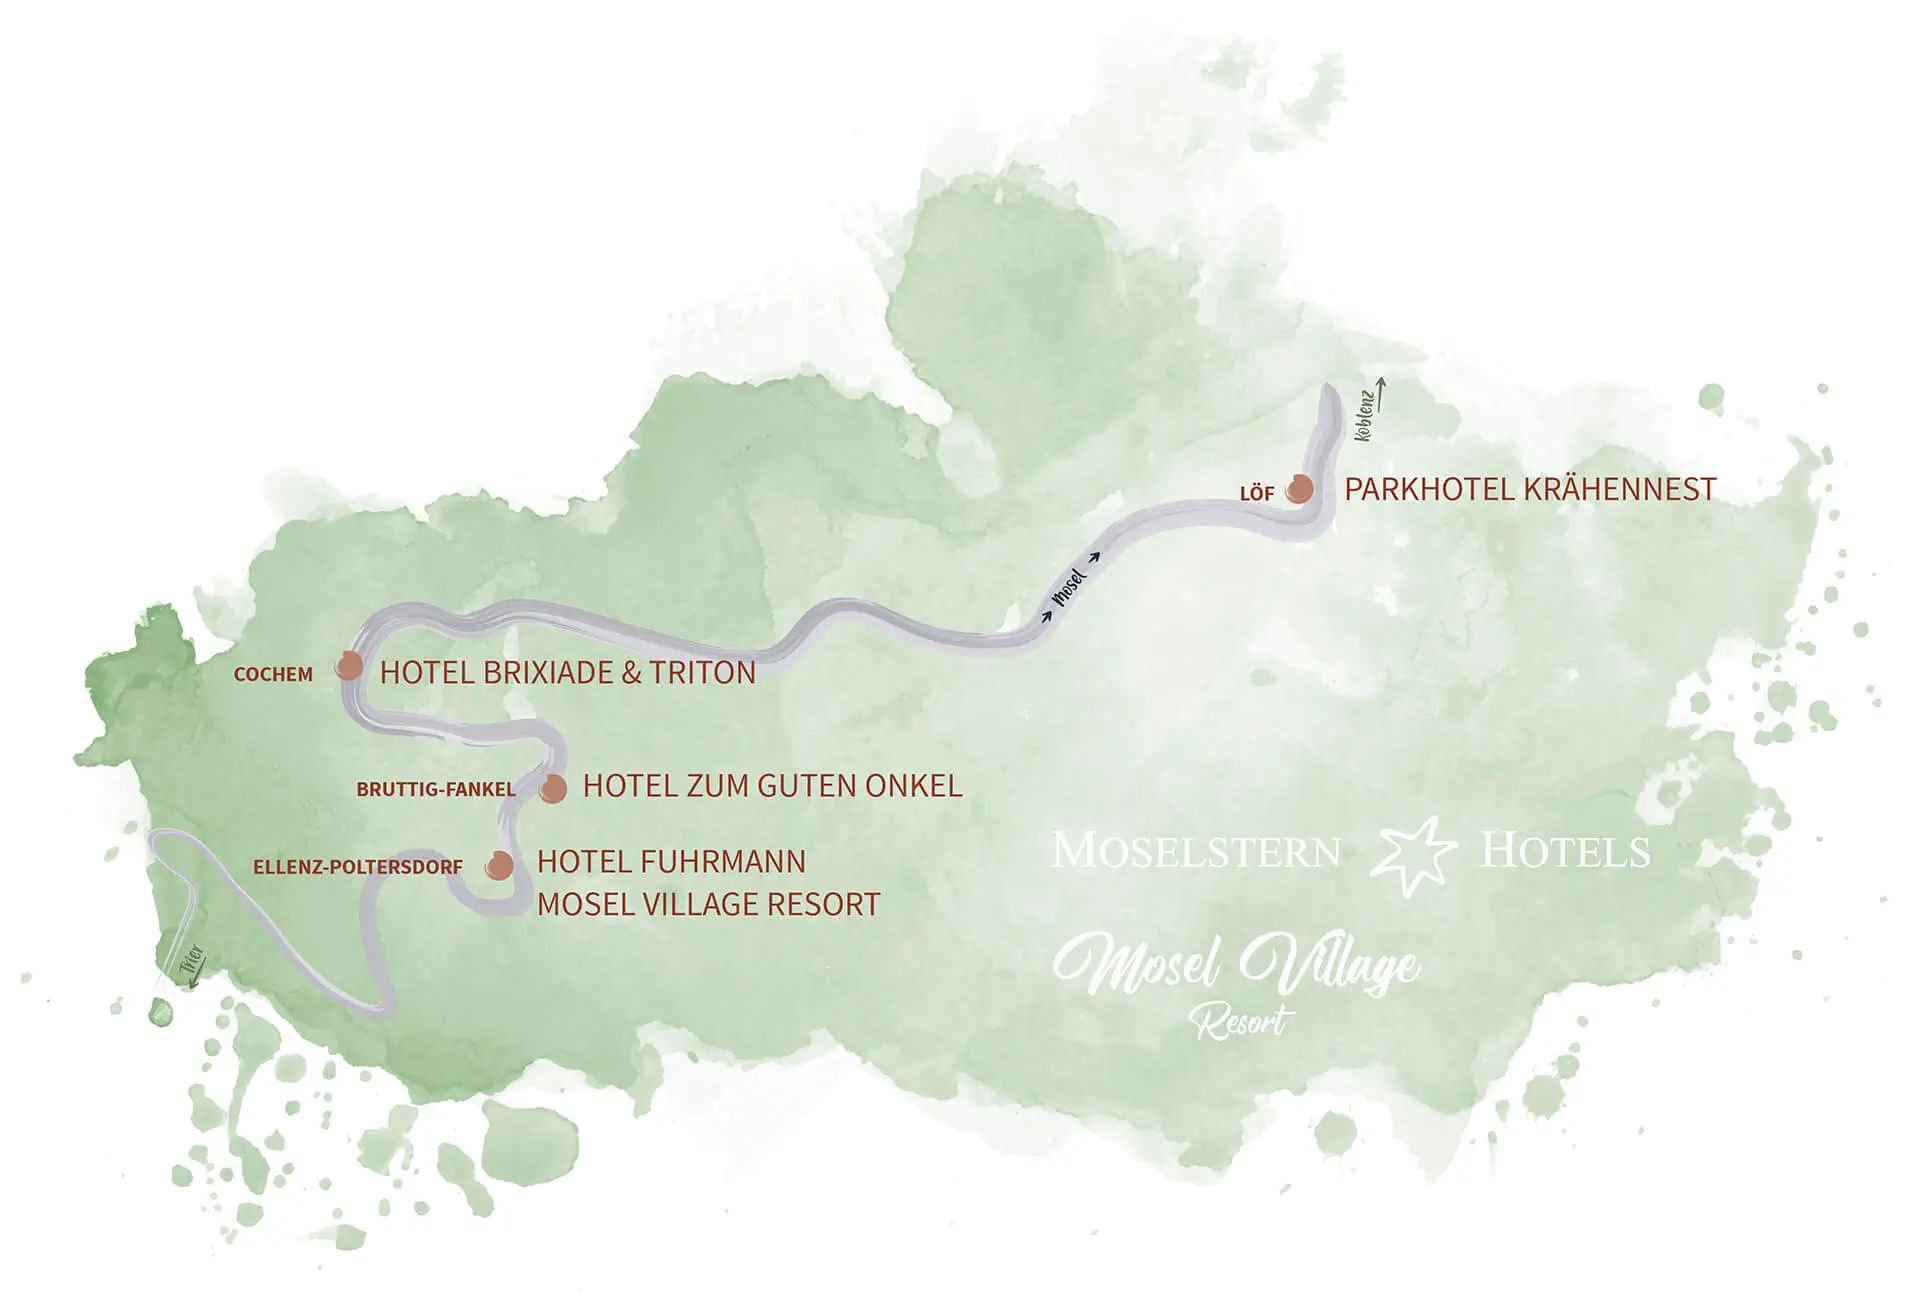 Moselkarte - Moselstern Hotels - Mosel Village Resort